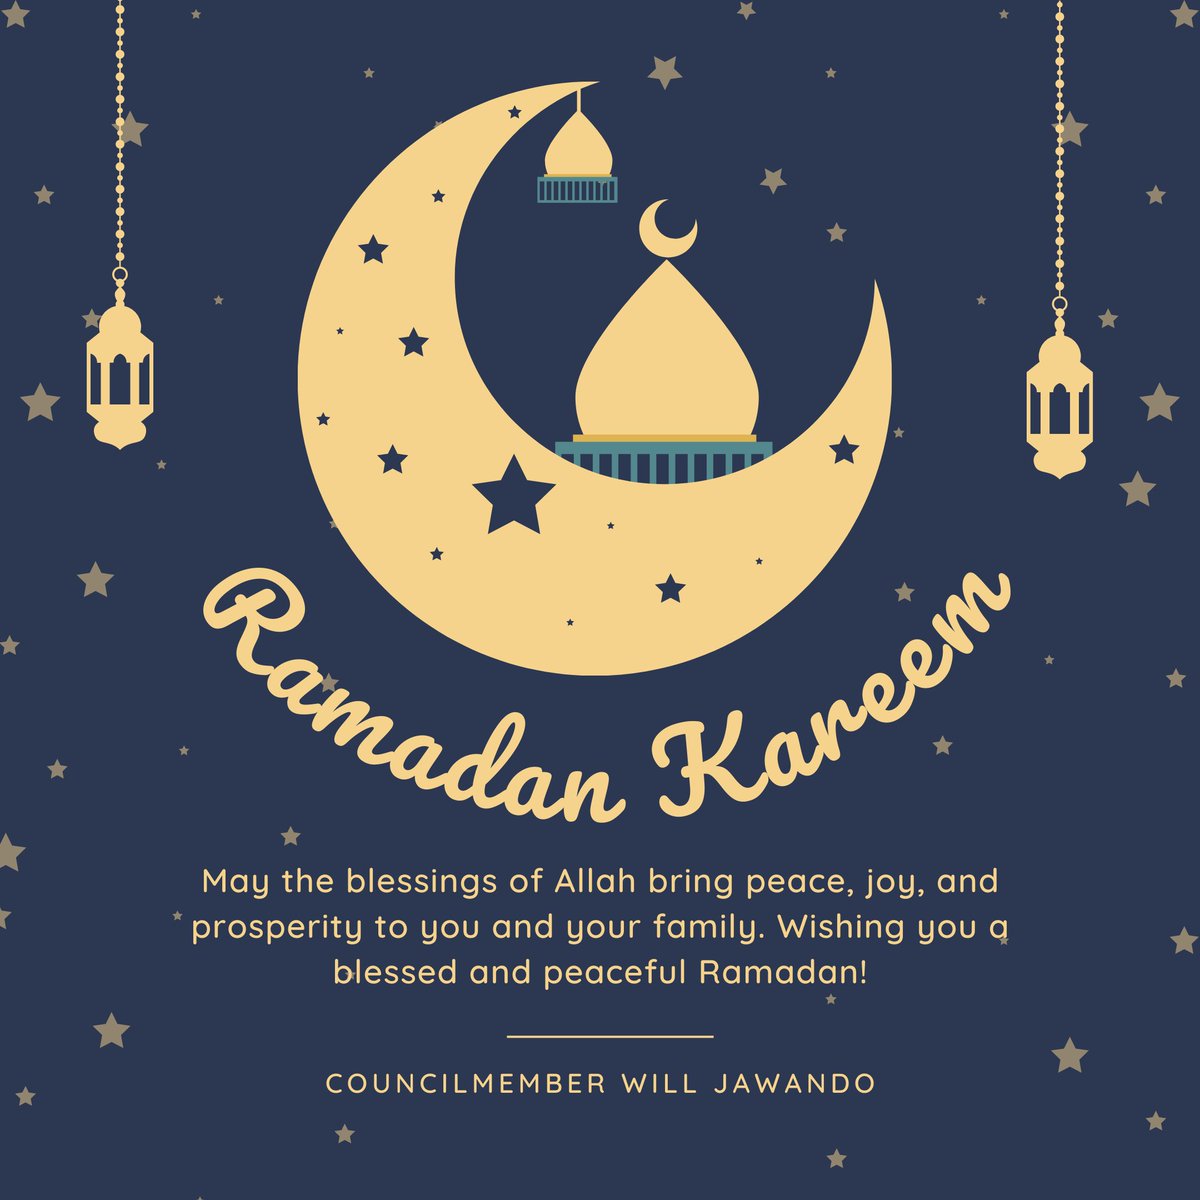 Happy #Ramadan to all who celebrate! 